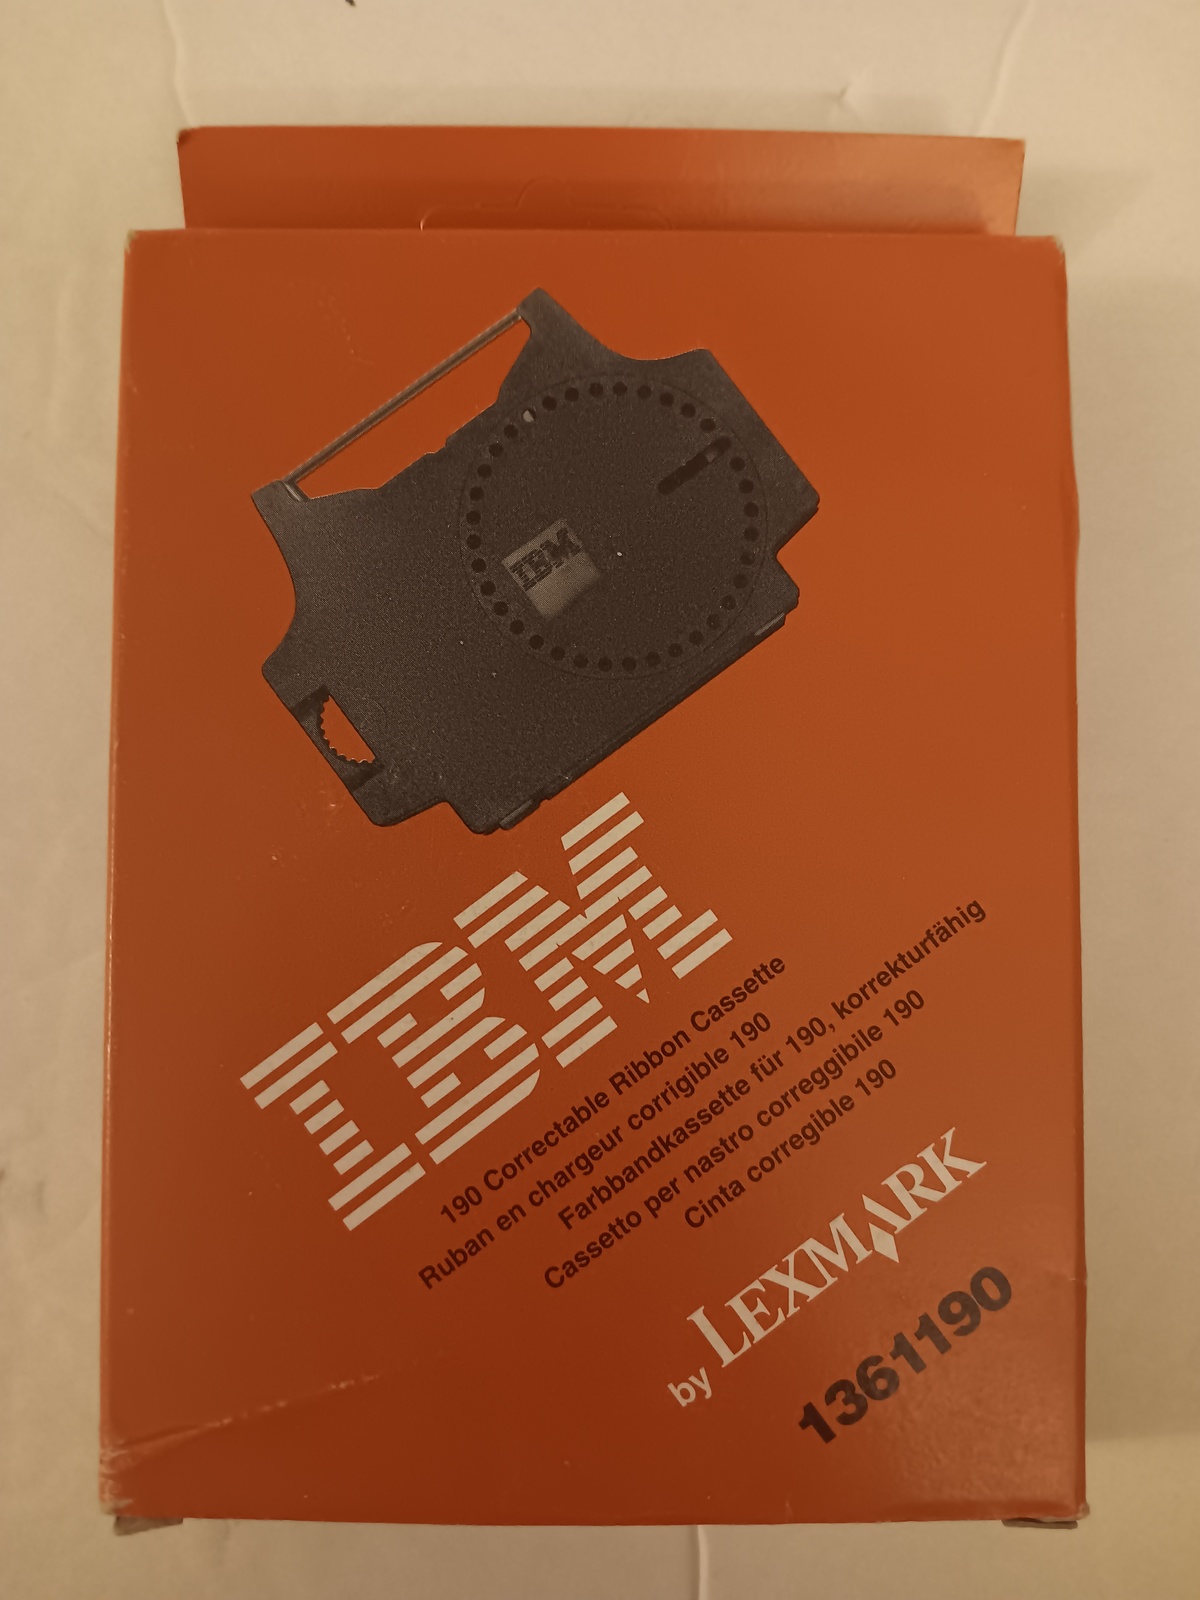 IBM / Lexmark 190 Correctable Typewriter Ribbon Cassette Part # 1361190  - $9.99